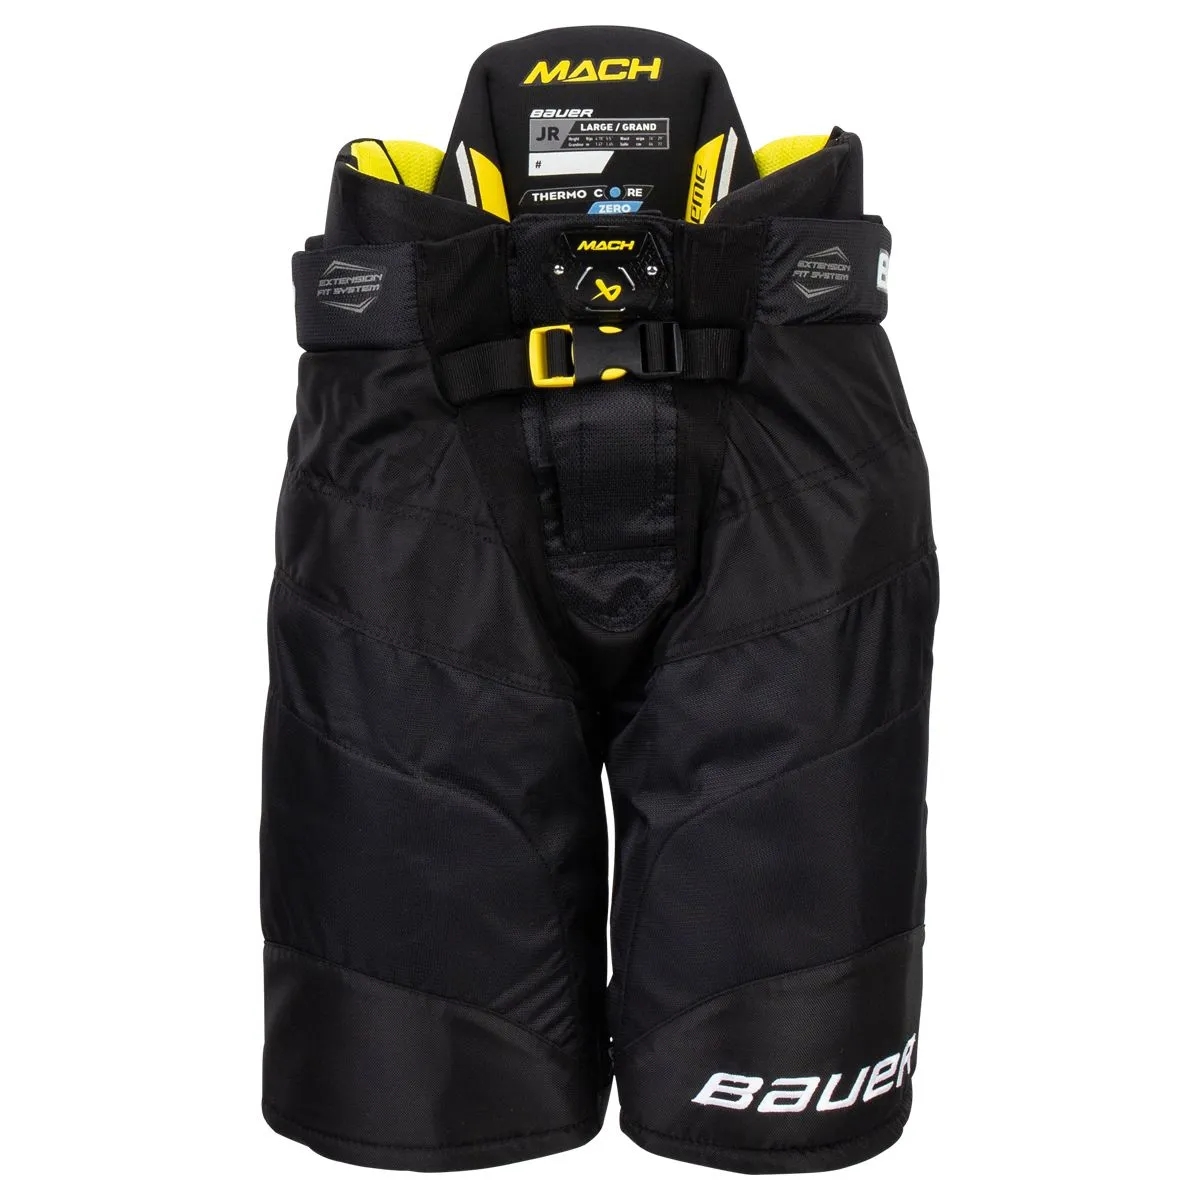 Bauer 2S Pro Jr Elbow Pad S19 - Perfect Edge Hockey-Lacrosse